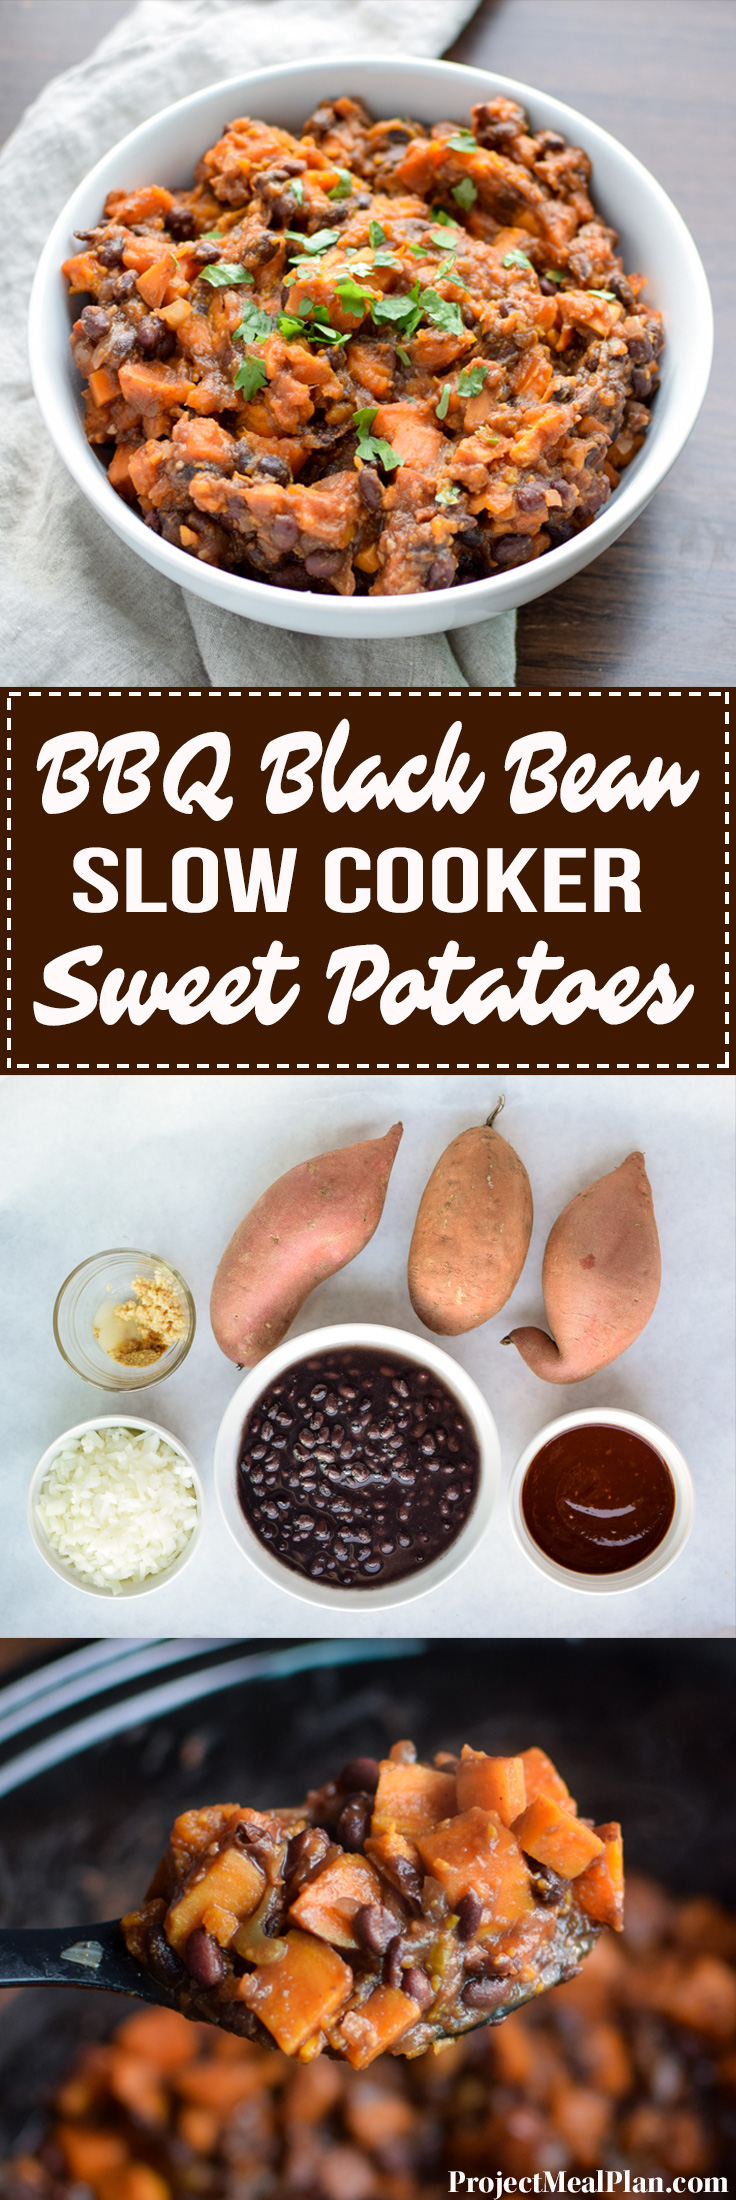 BBQ Black Bean Slow Cooker Sweet Potatoes - Black beans, sweet potatoes, and spicy BBQ sauce. A match made in side dish heaven! - ProjectMealPlan.com